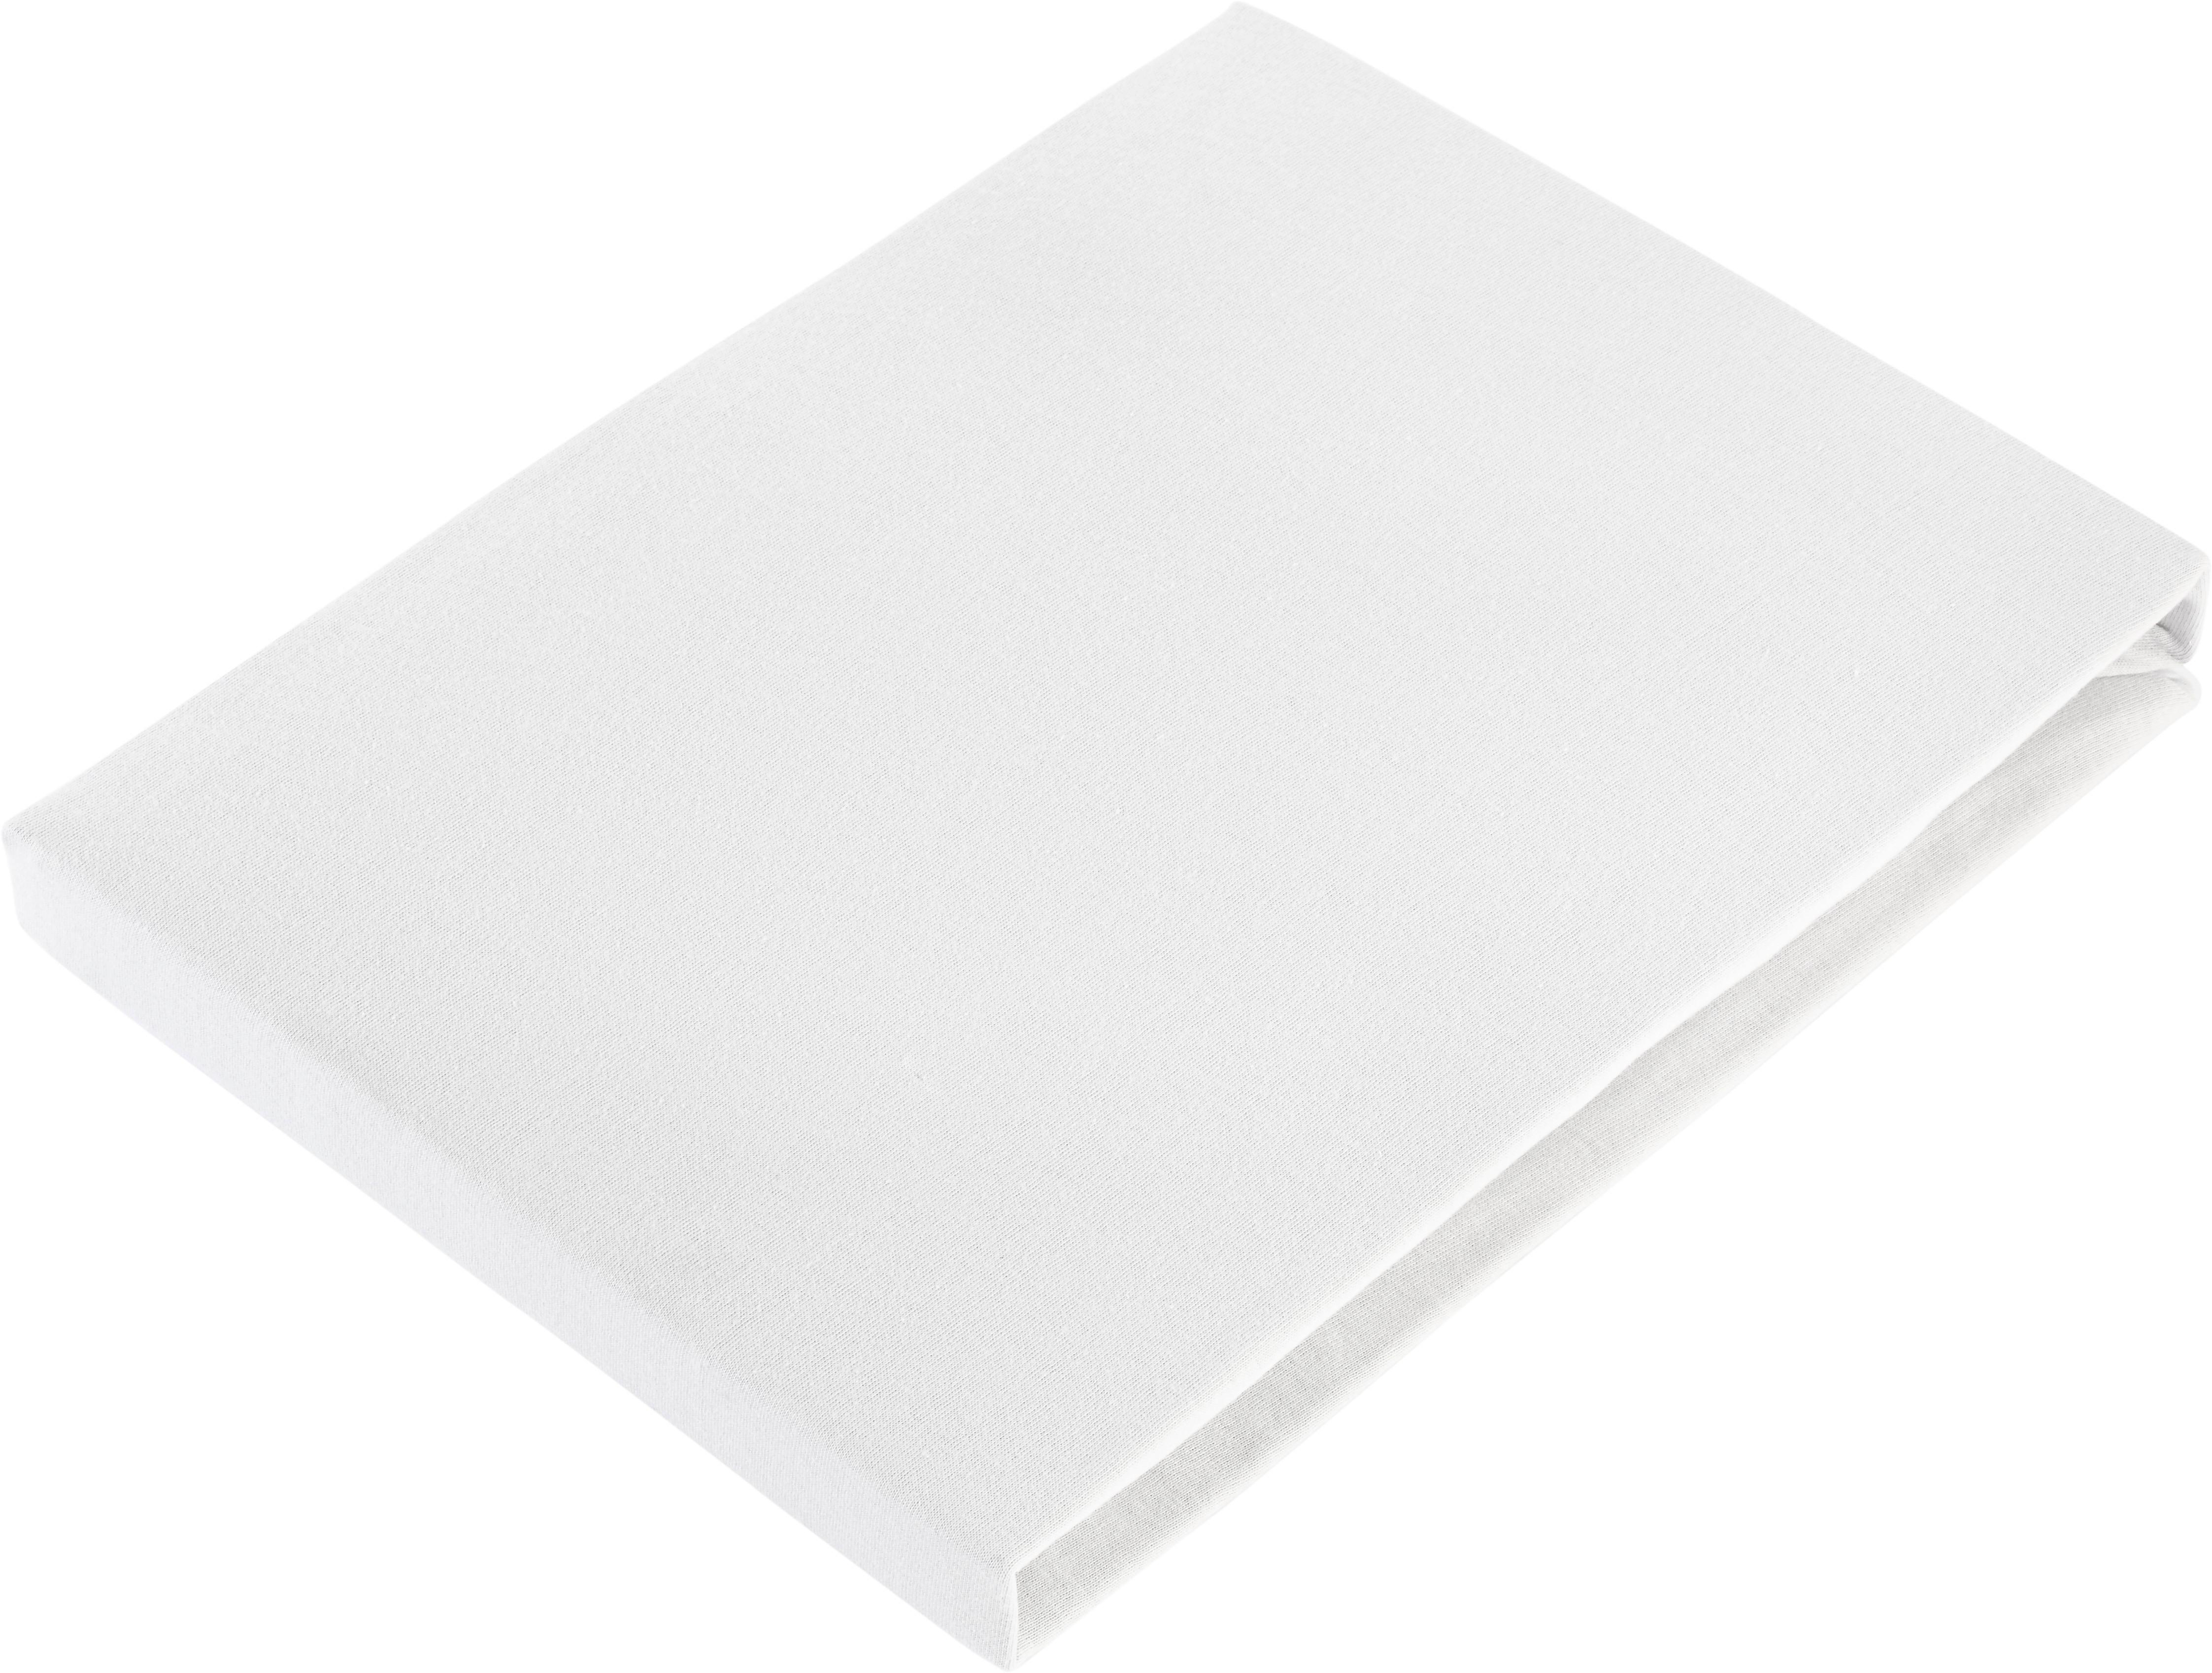 Spannbetttuch Basic in Platin ca. 100x200cm - Silberfarben, Textil (100/200cm) - Modern Living